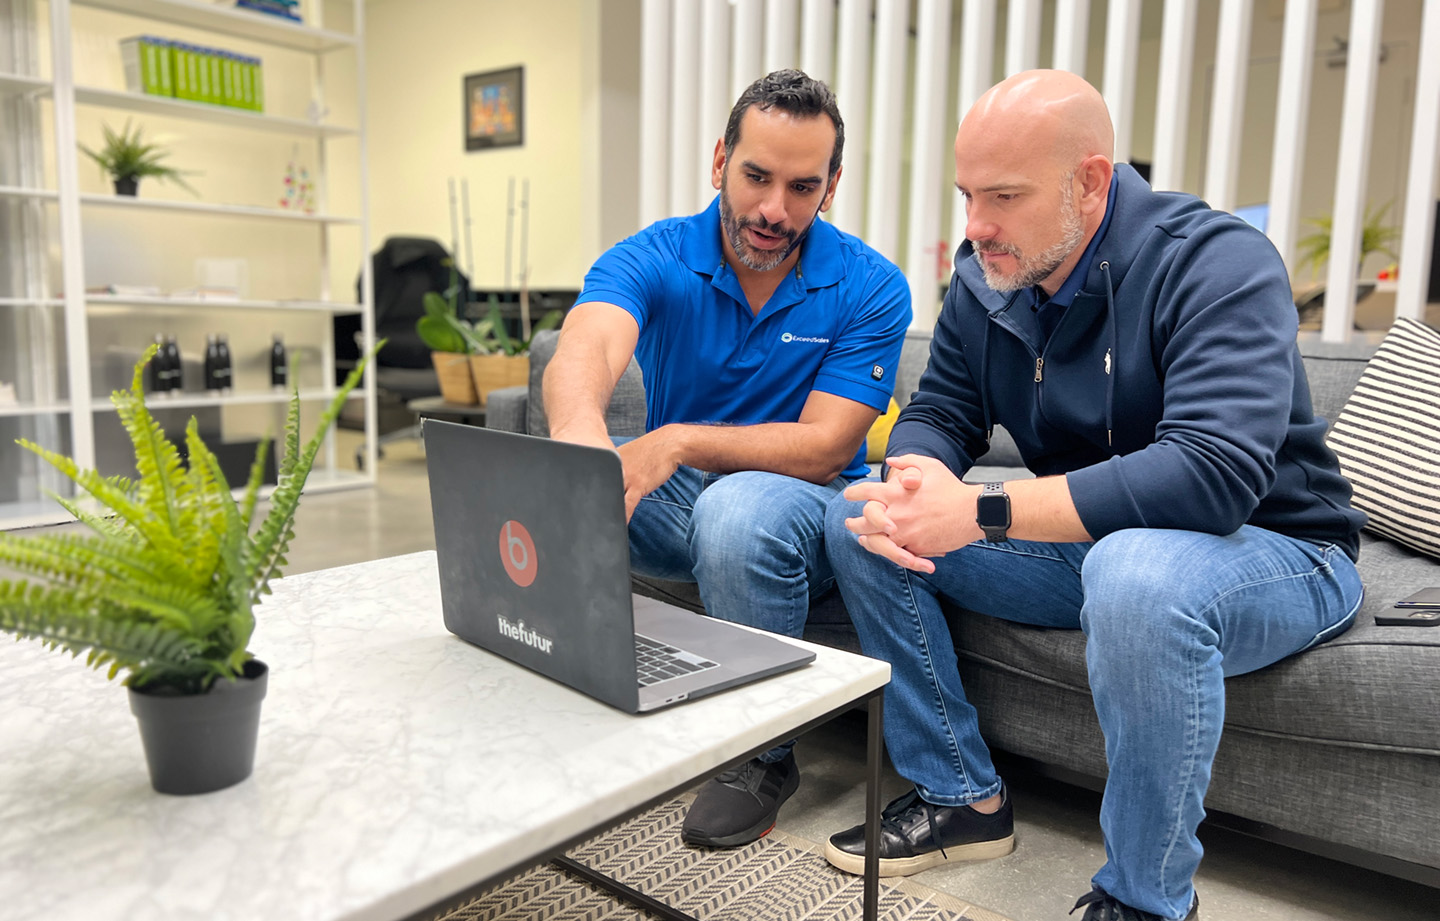 A sales coach teaches an accountant on a laptop in an office